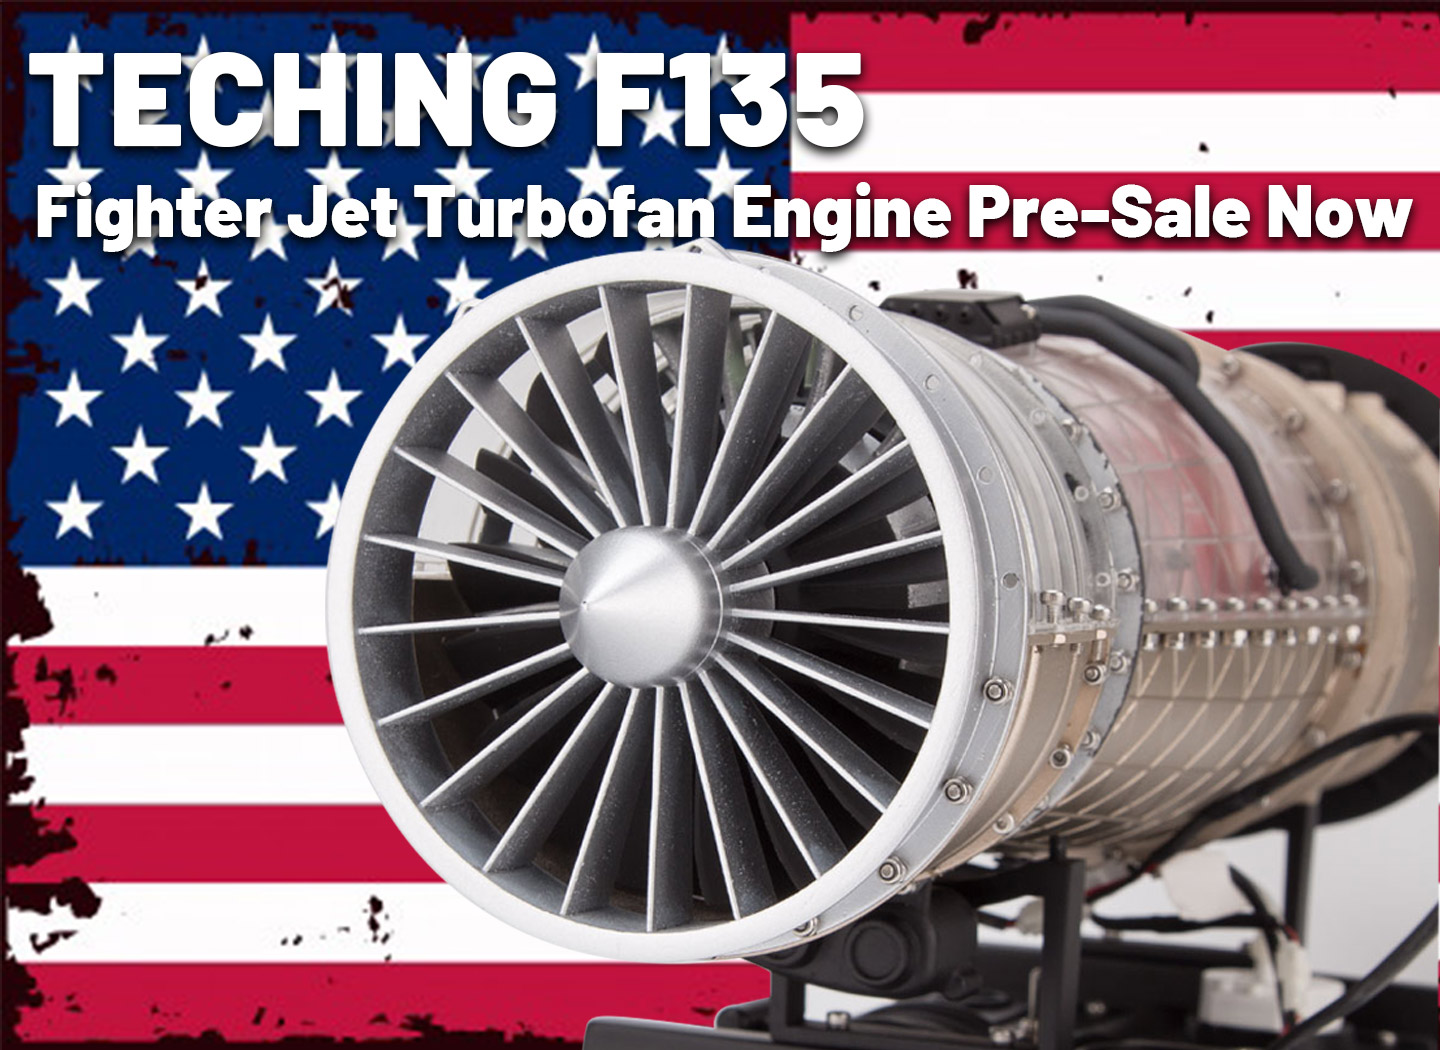 TECHING F135 Turbofan Engine